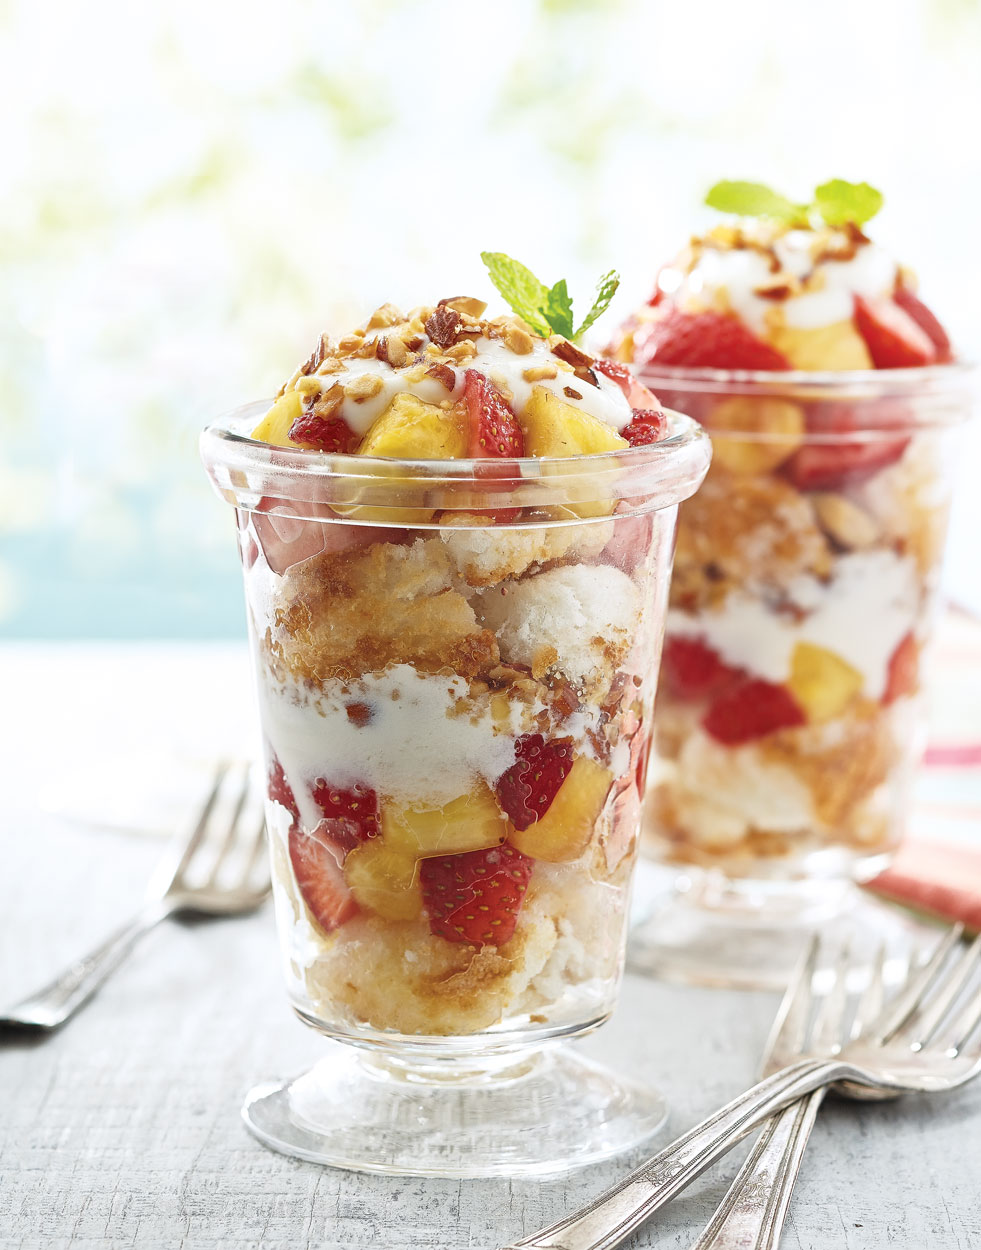 Strawberry & Pineapple Trifles with Amaretto & Vanilla Yogurt